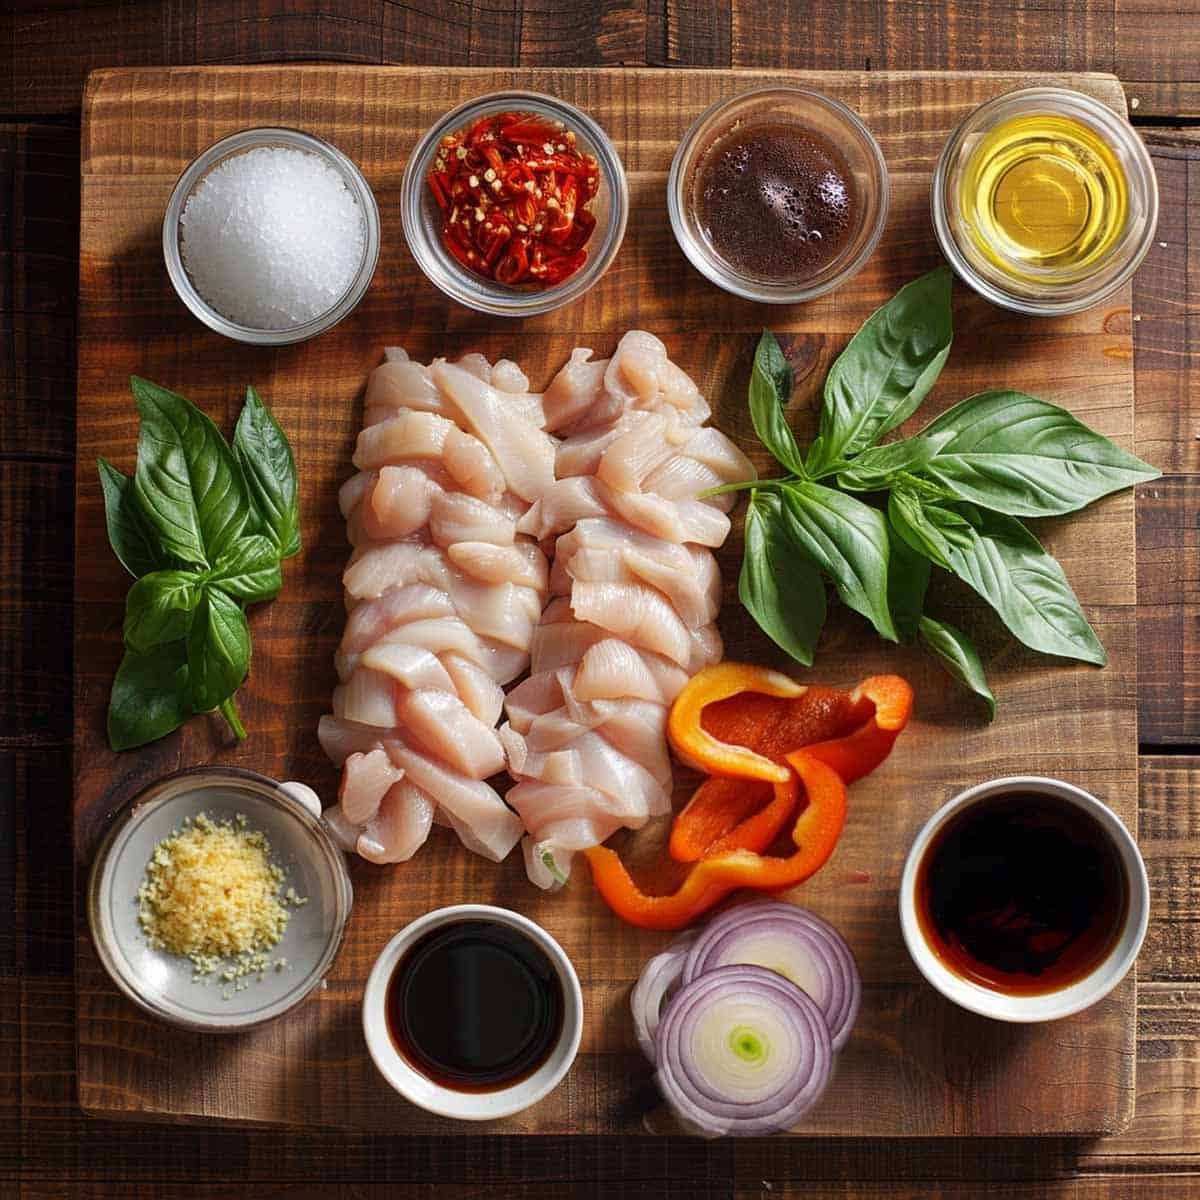 Ingredients for Pad Krapow Gai: ground chicken, Thai basil, garlic, red chili, soy sauce, fish sauce, oyster sauce, sugar, jasmine rice